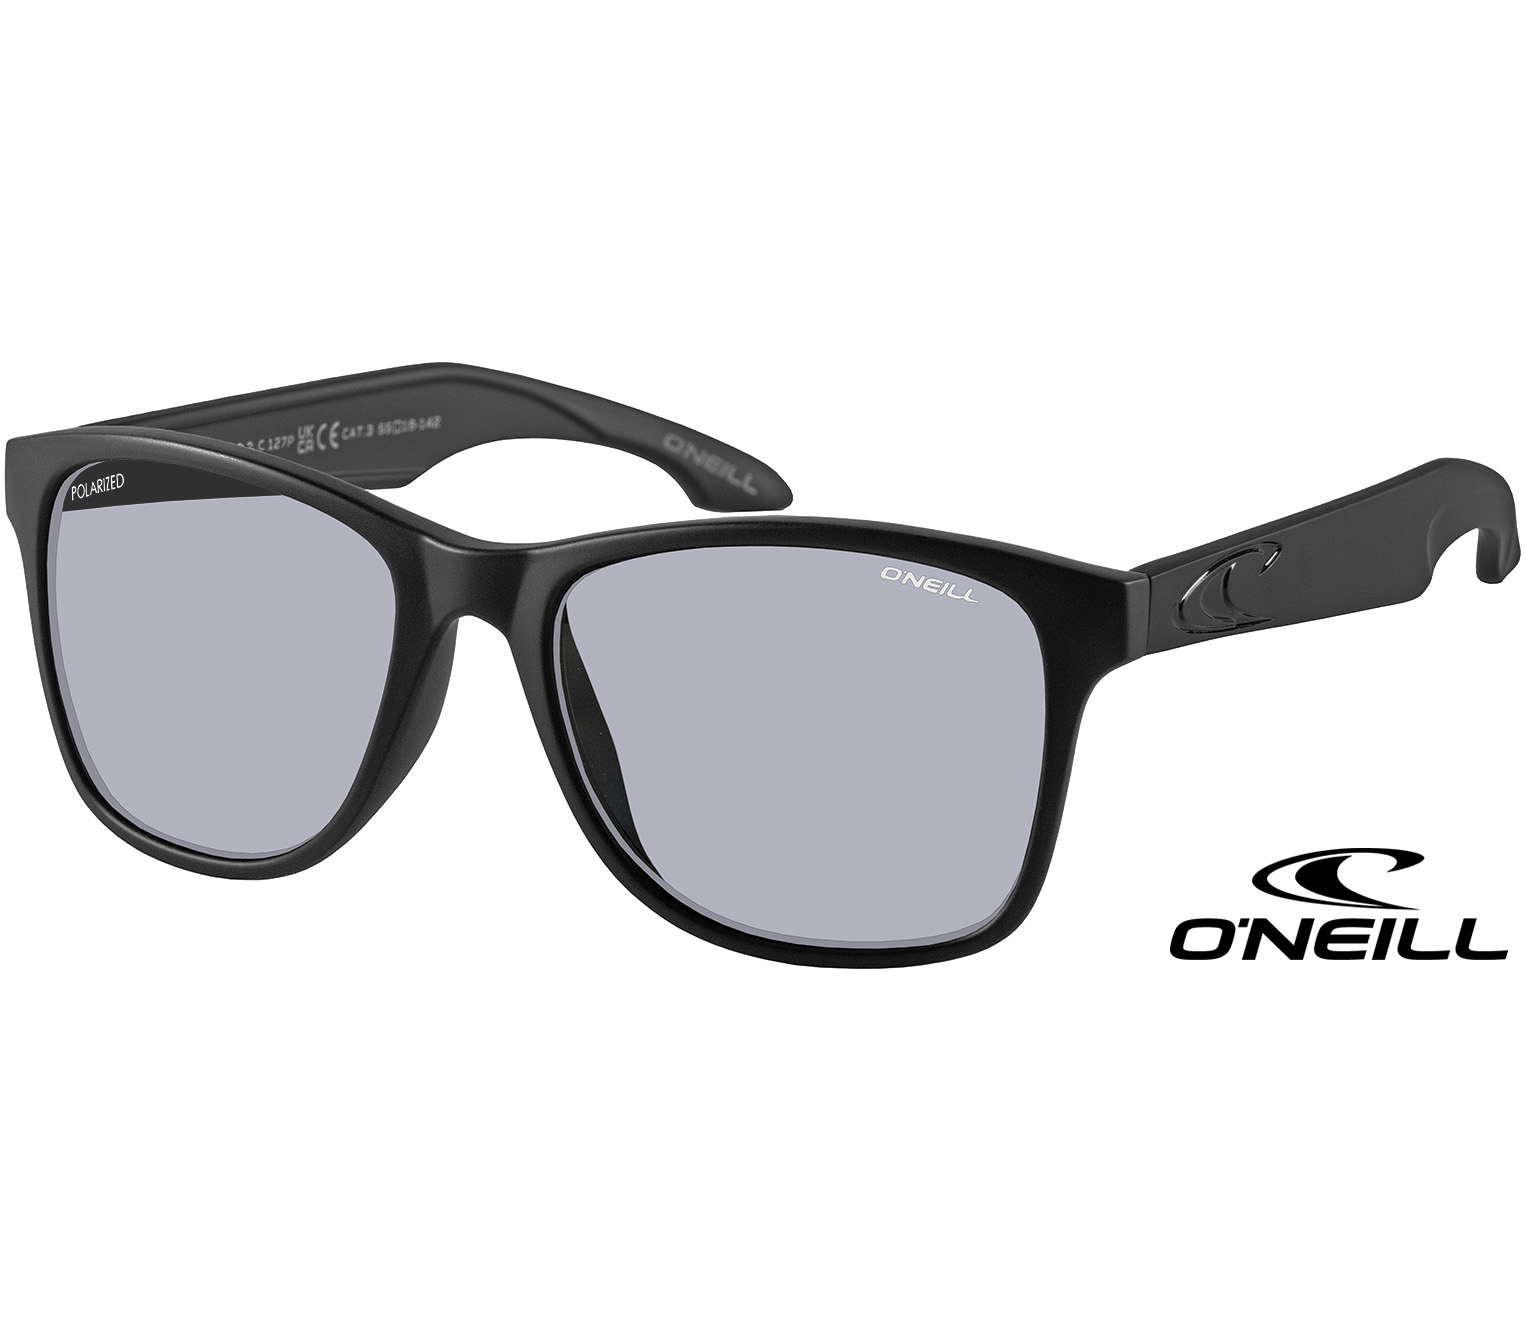 Main Image (Angle) - Shore (Black) Sunglasses